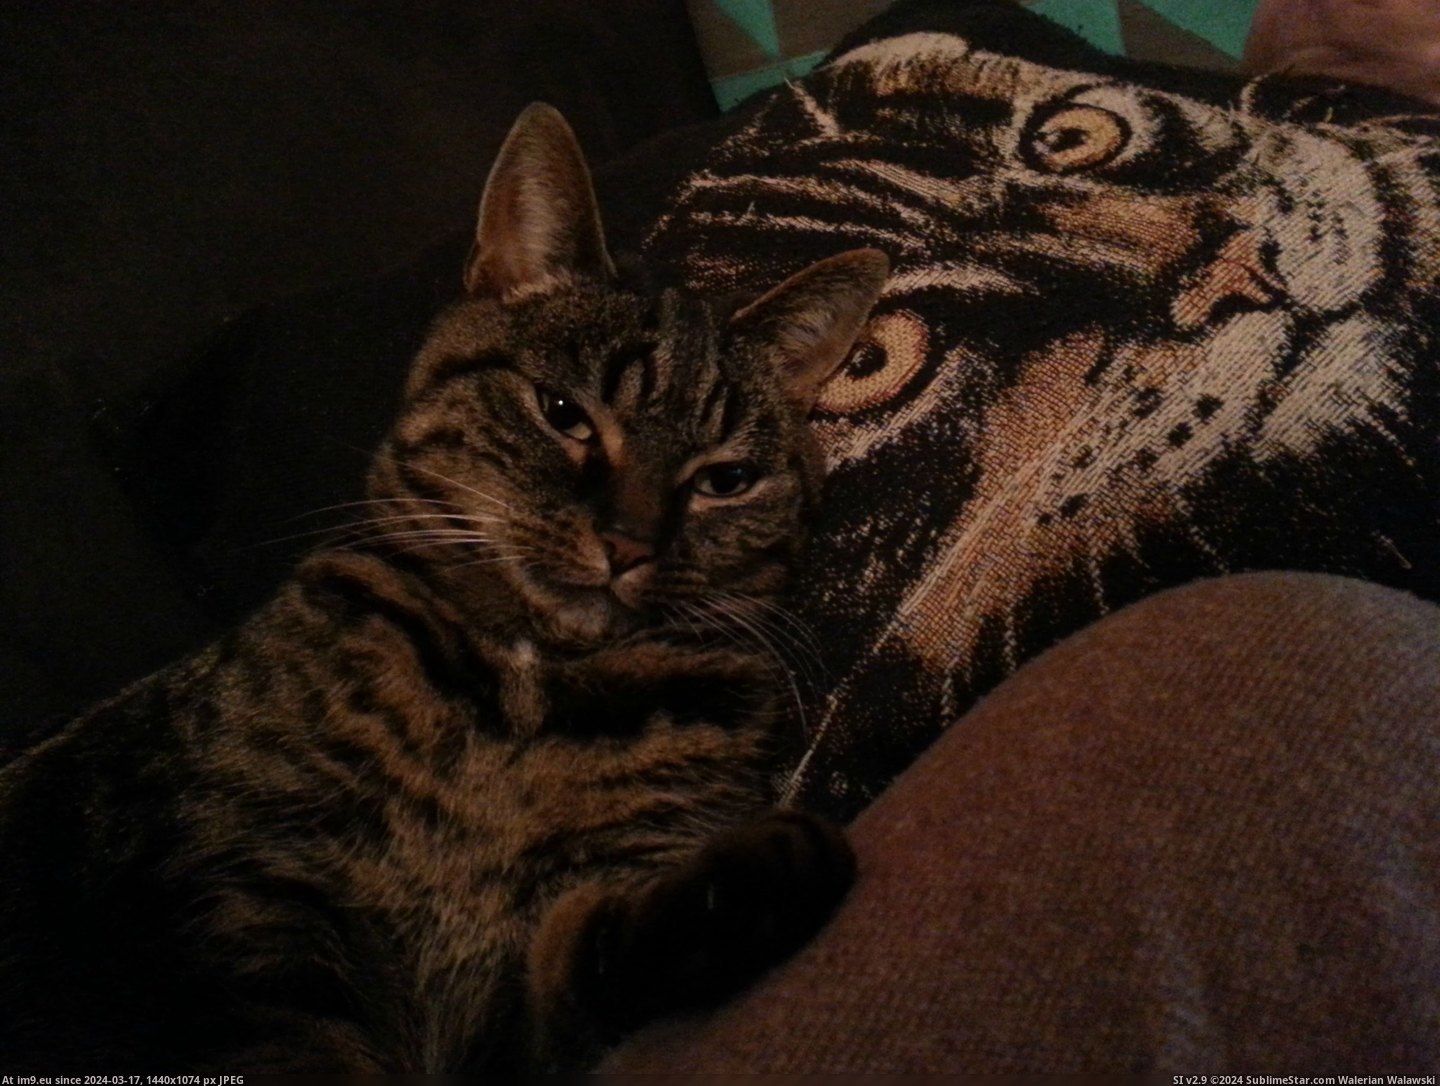 #Cats #Favorite #Pillow #Sleeping #Charlie [Cats] Charlie sleeping against her favorite pillow Pic. (Bild von album My r/CATS favs))